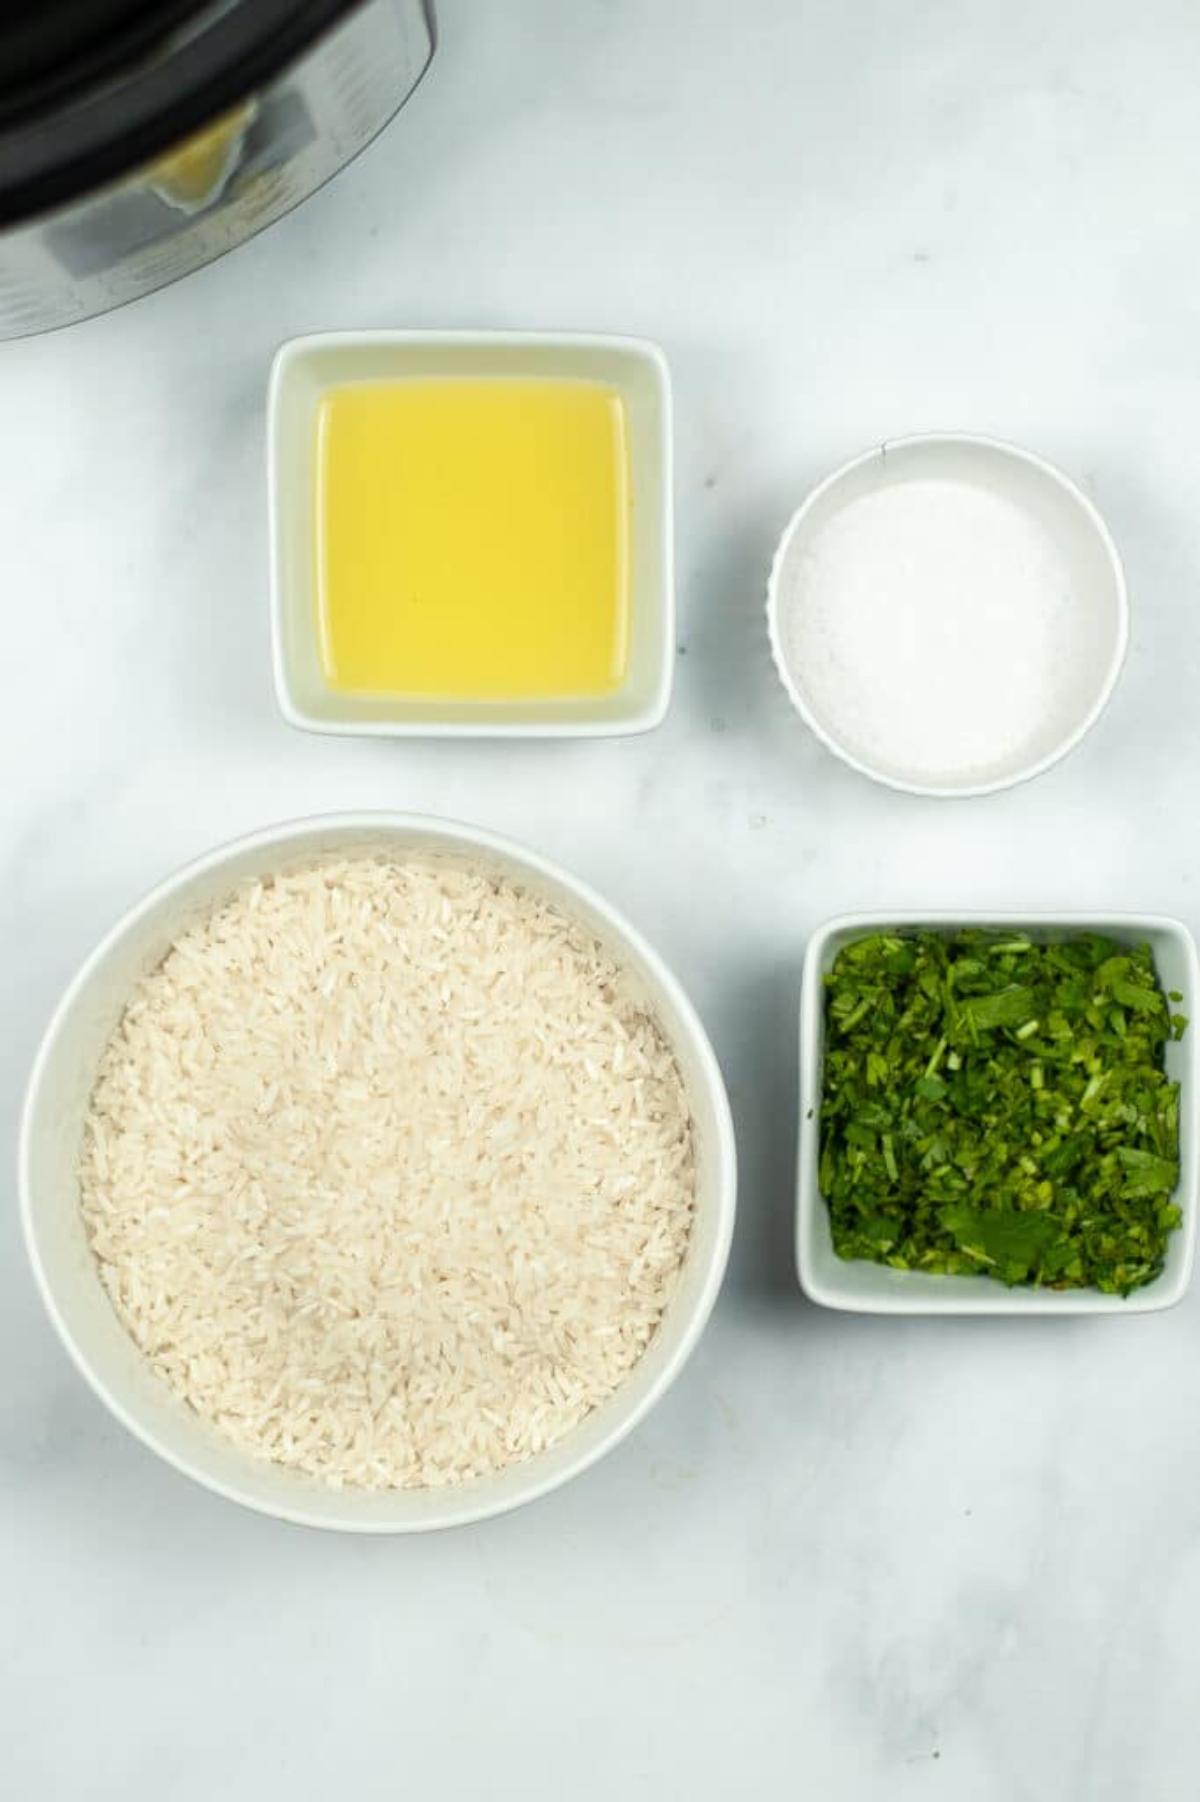 Ingredients to make cilantro lime rice.